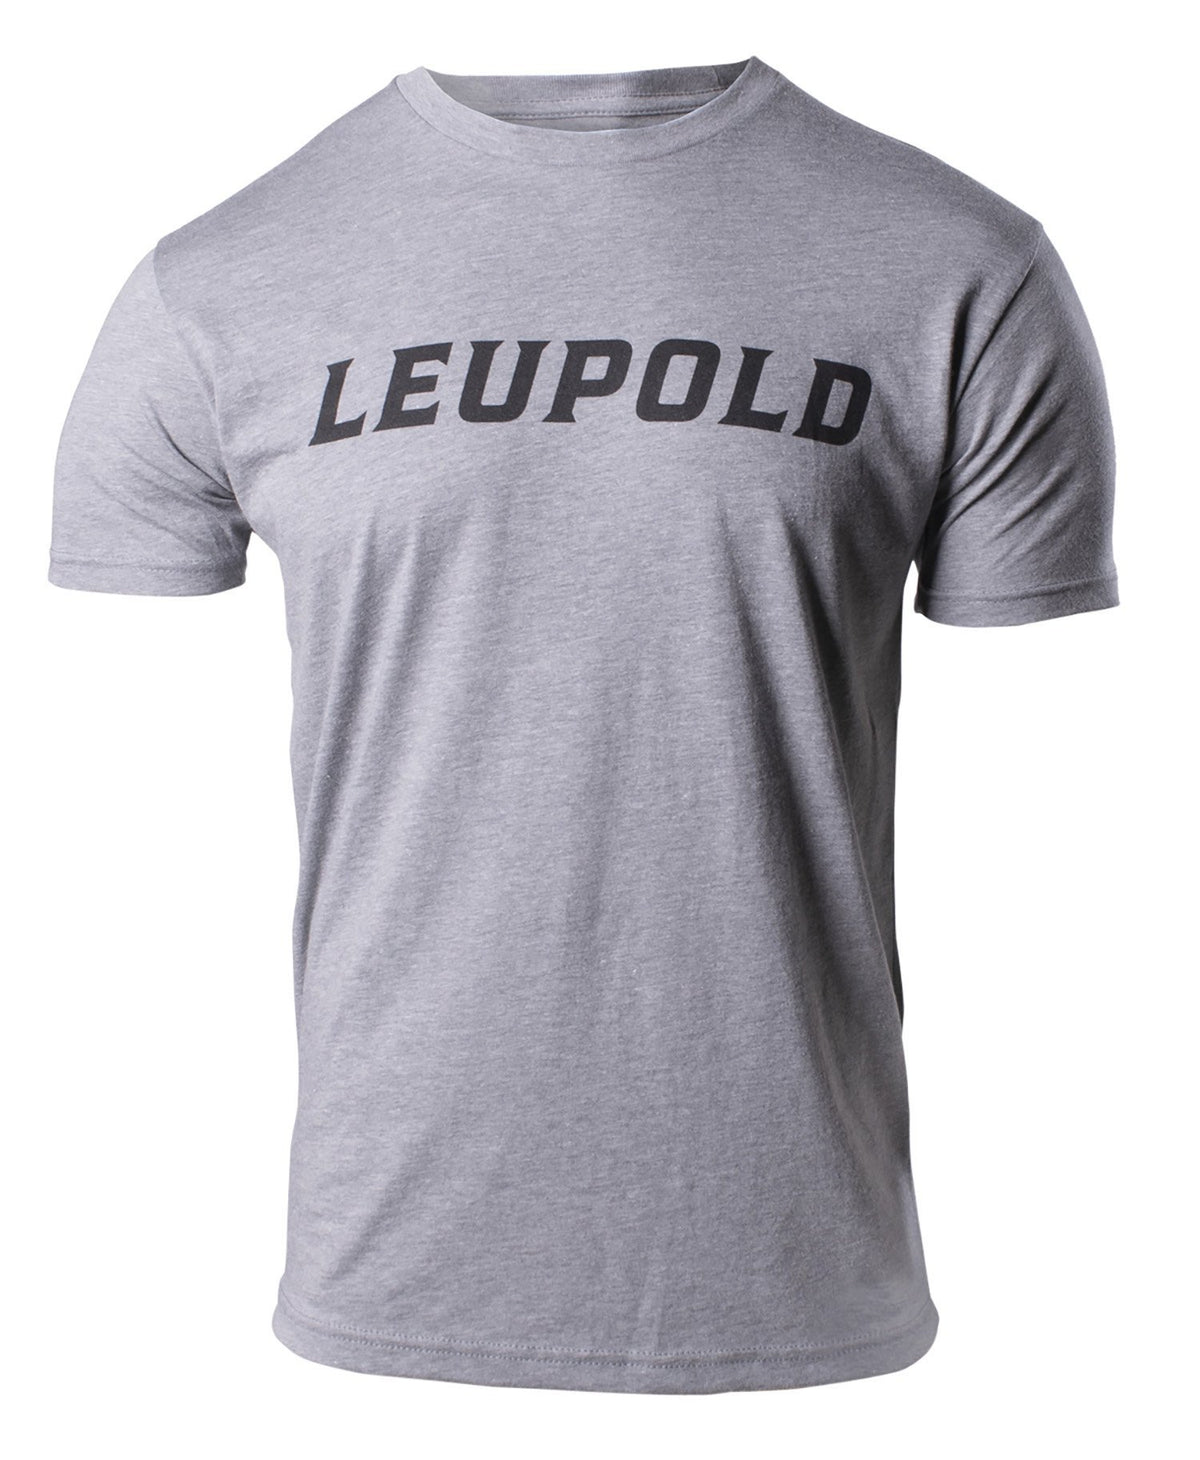 Leupold Wordmark T-Shirt Graphite Heather Medium Short Sleeve - Pacific Flyway Supplies